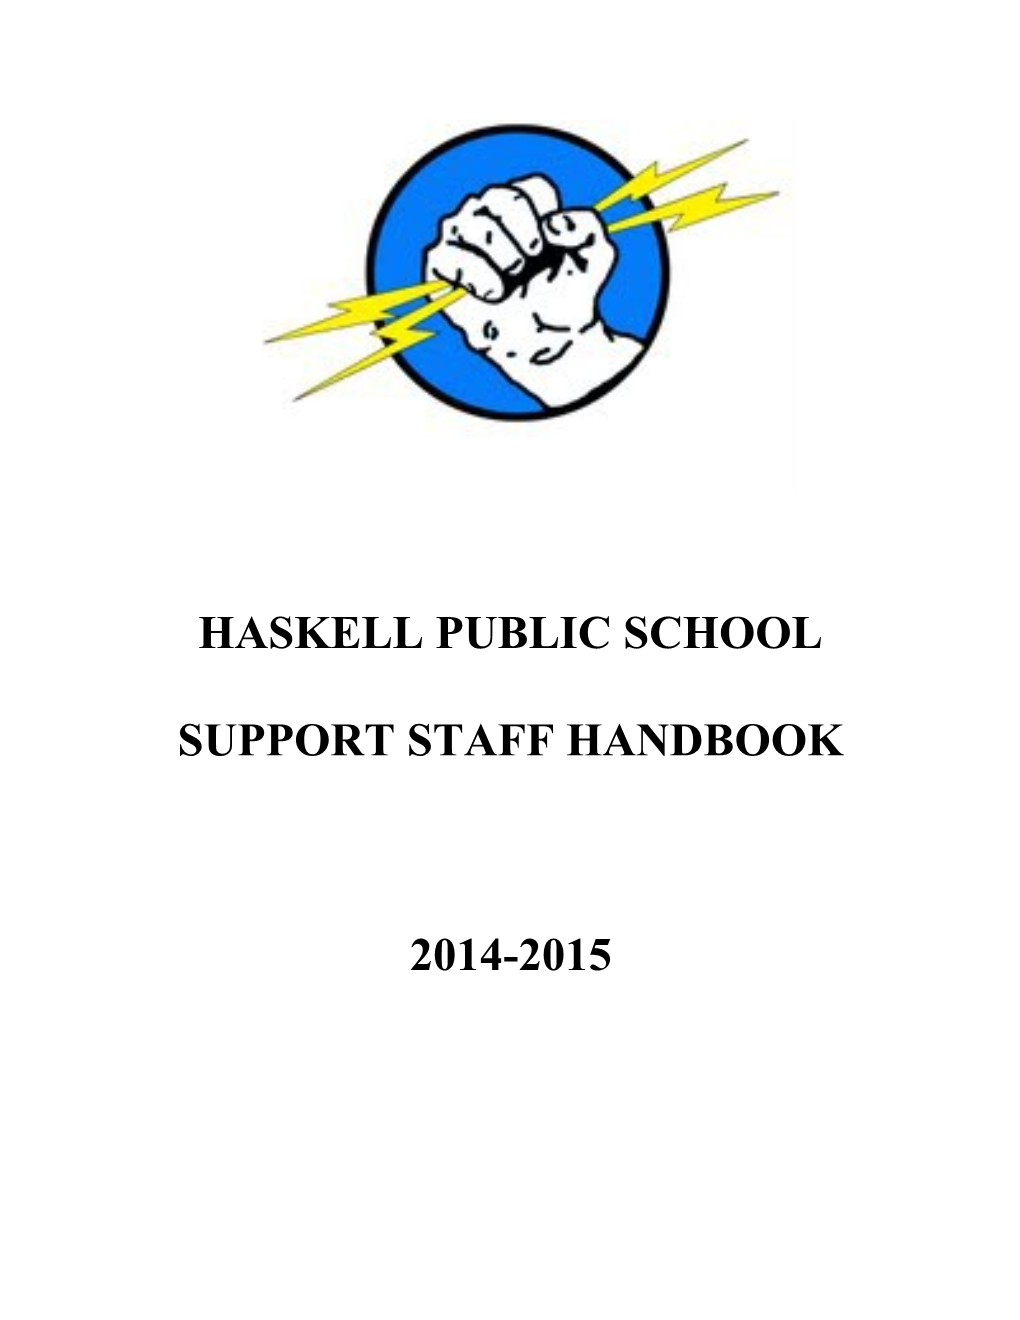 Haskell Public School